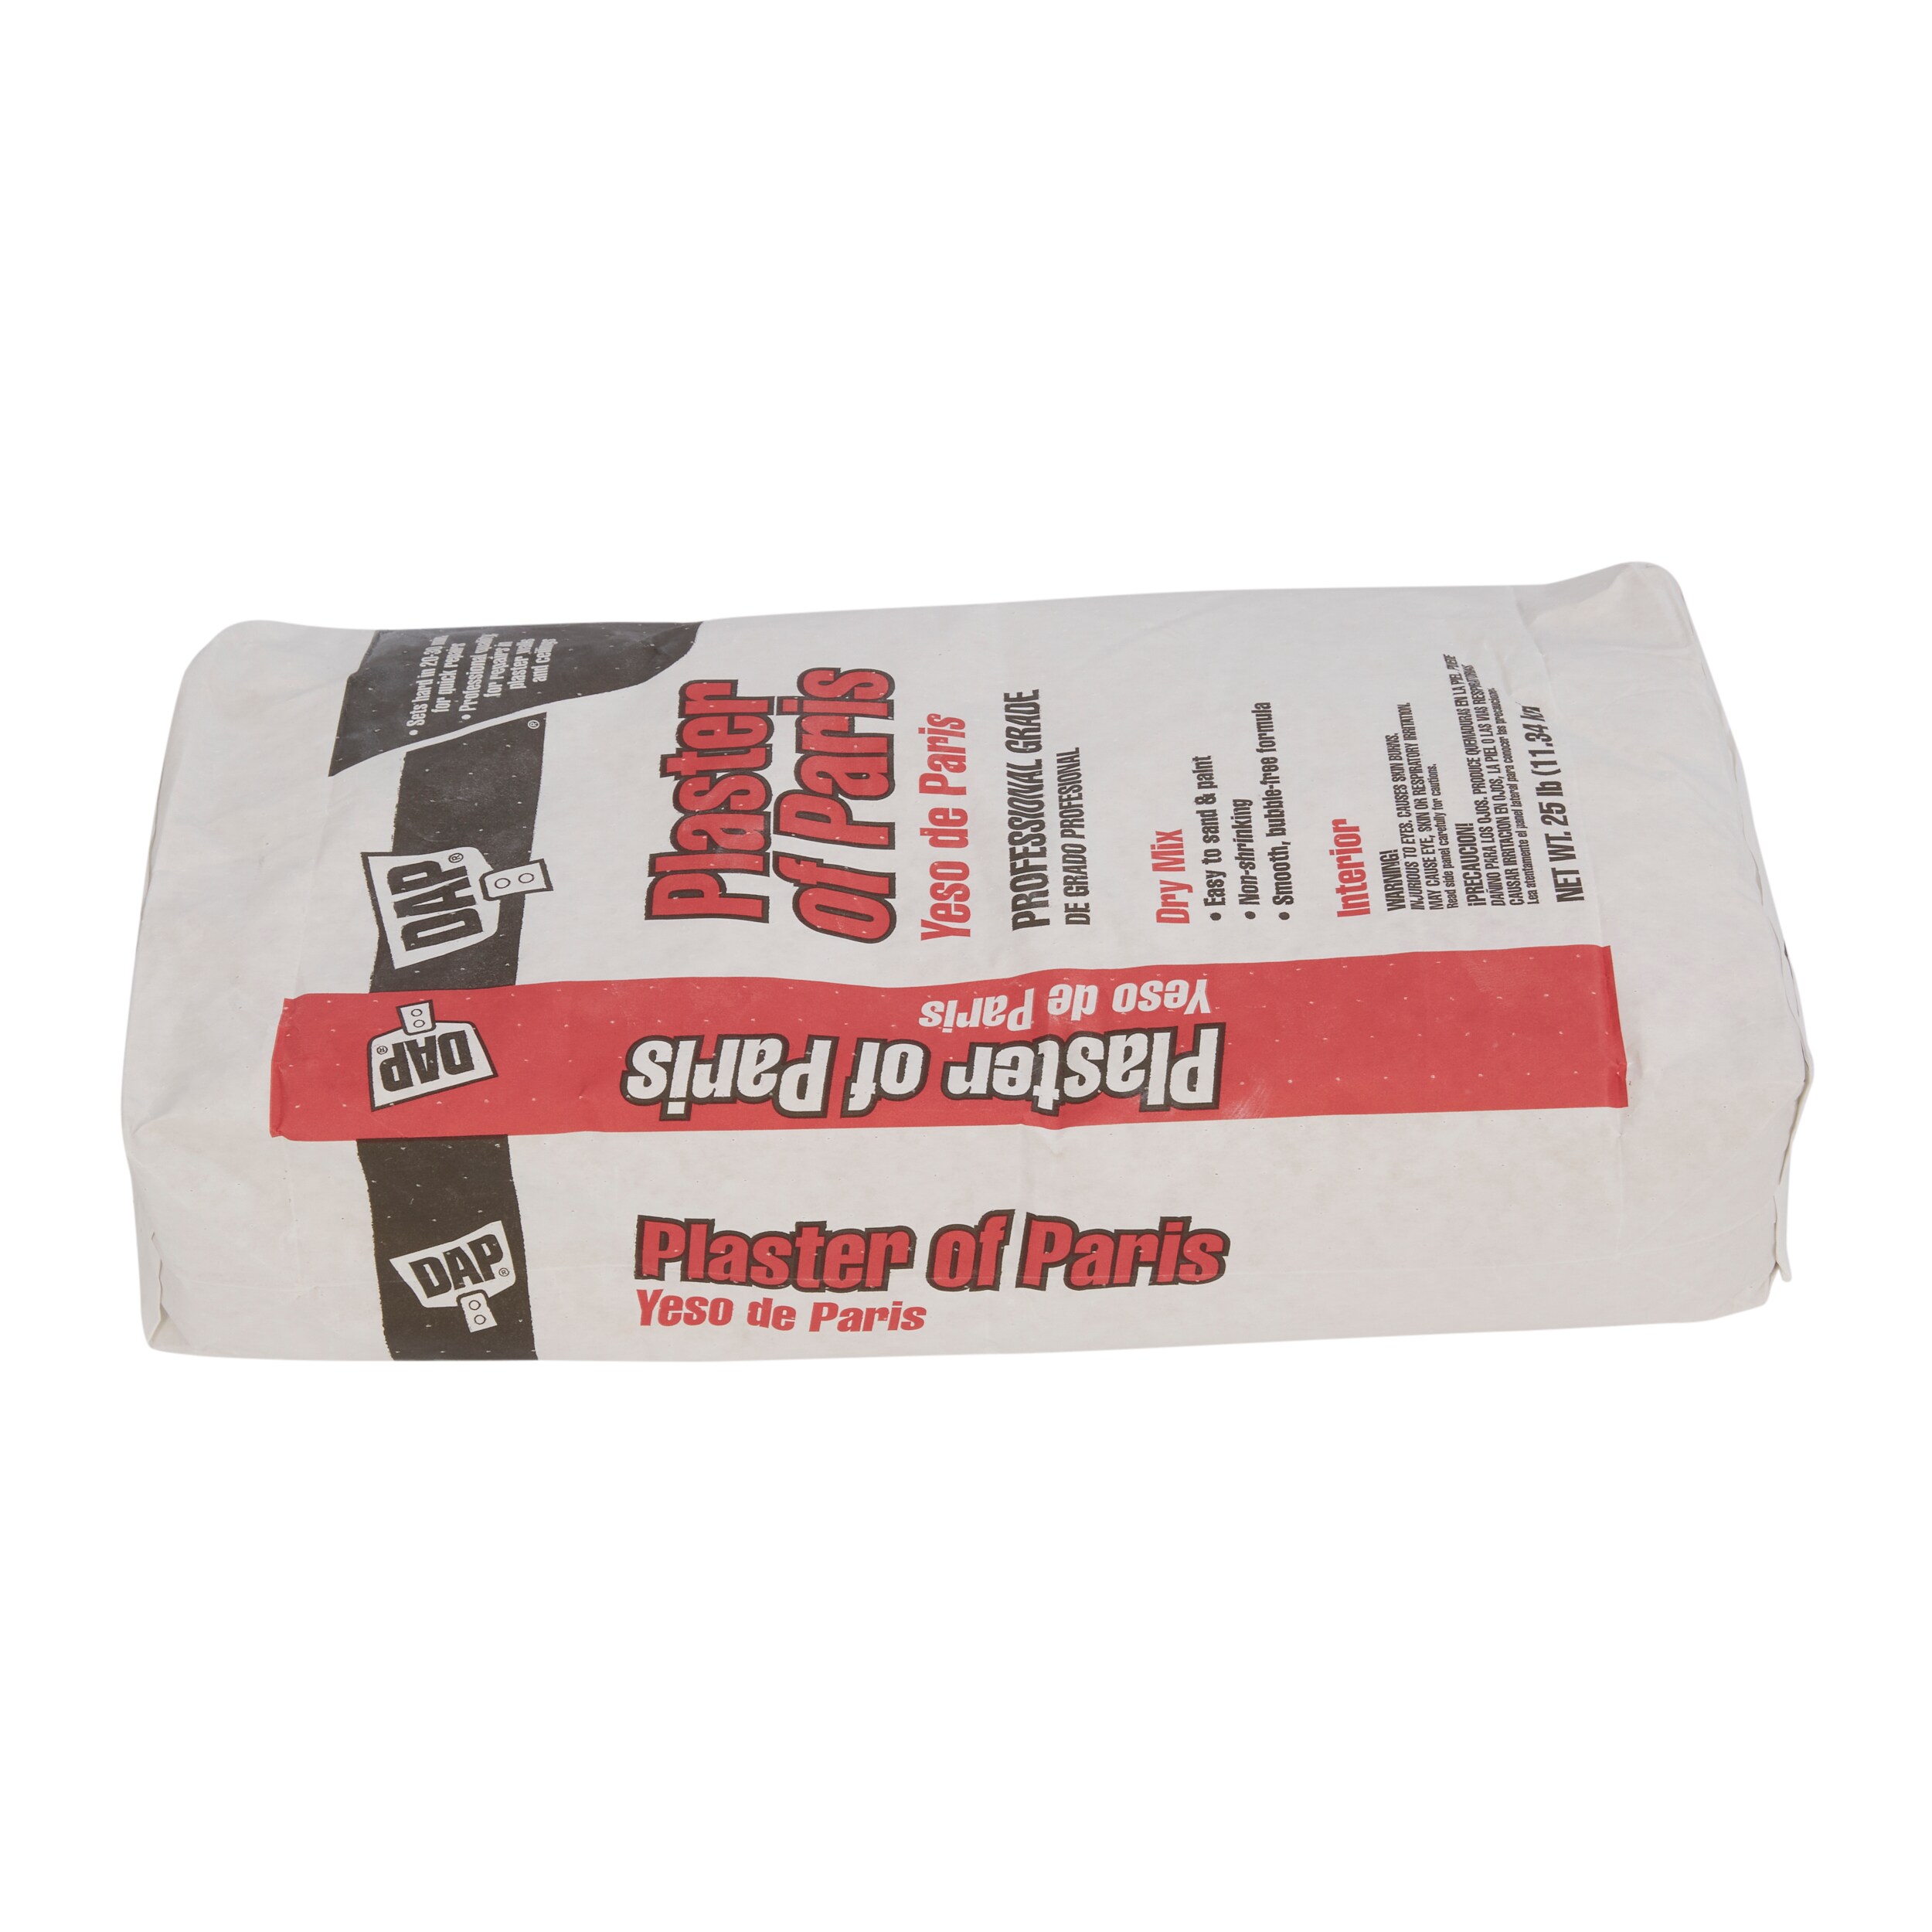 Plaster Of Paris Powder, Packaging Type: Bags, Packaging Size: 25